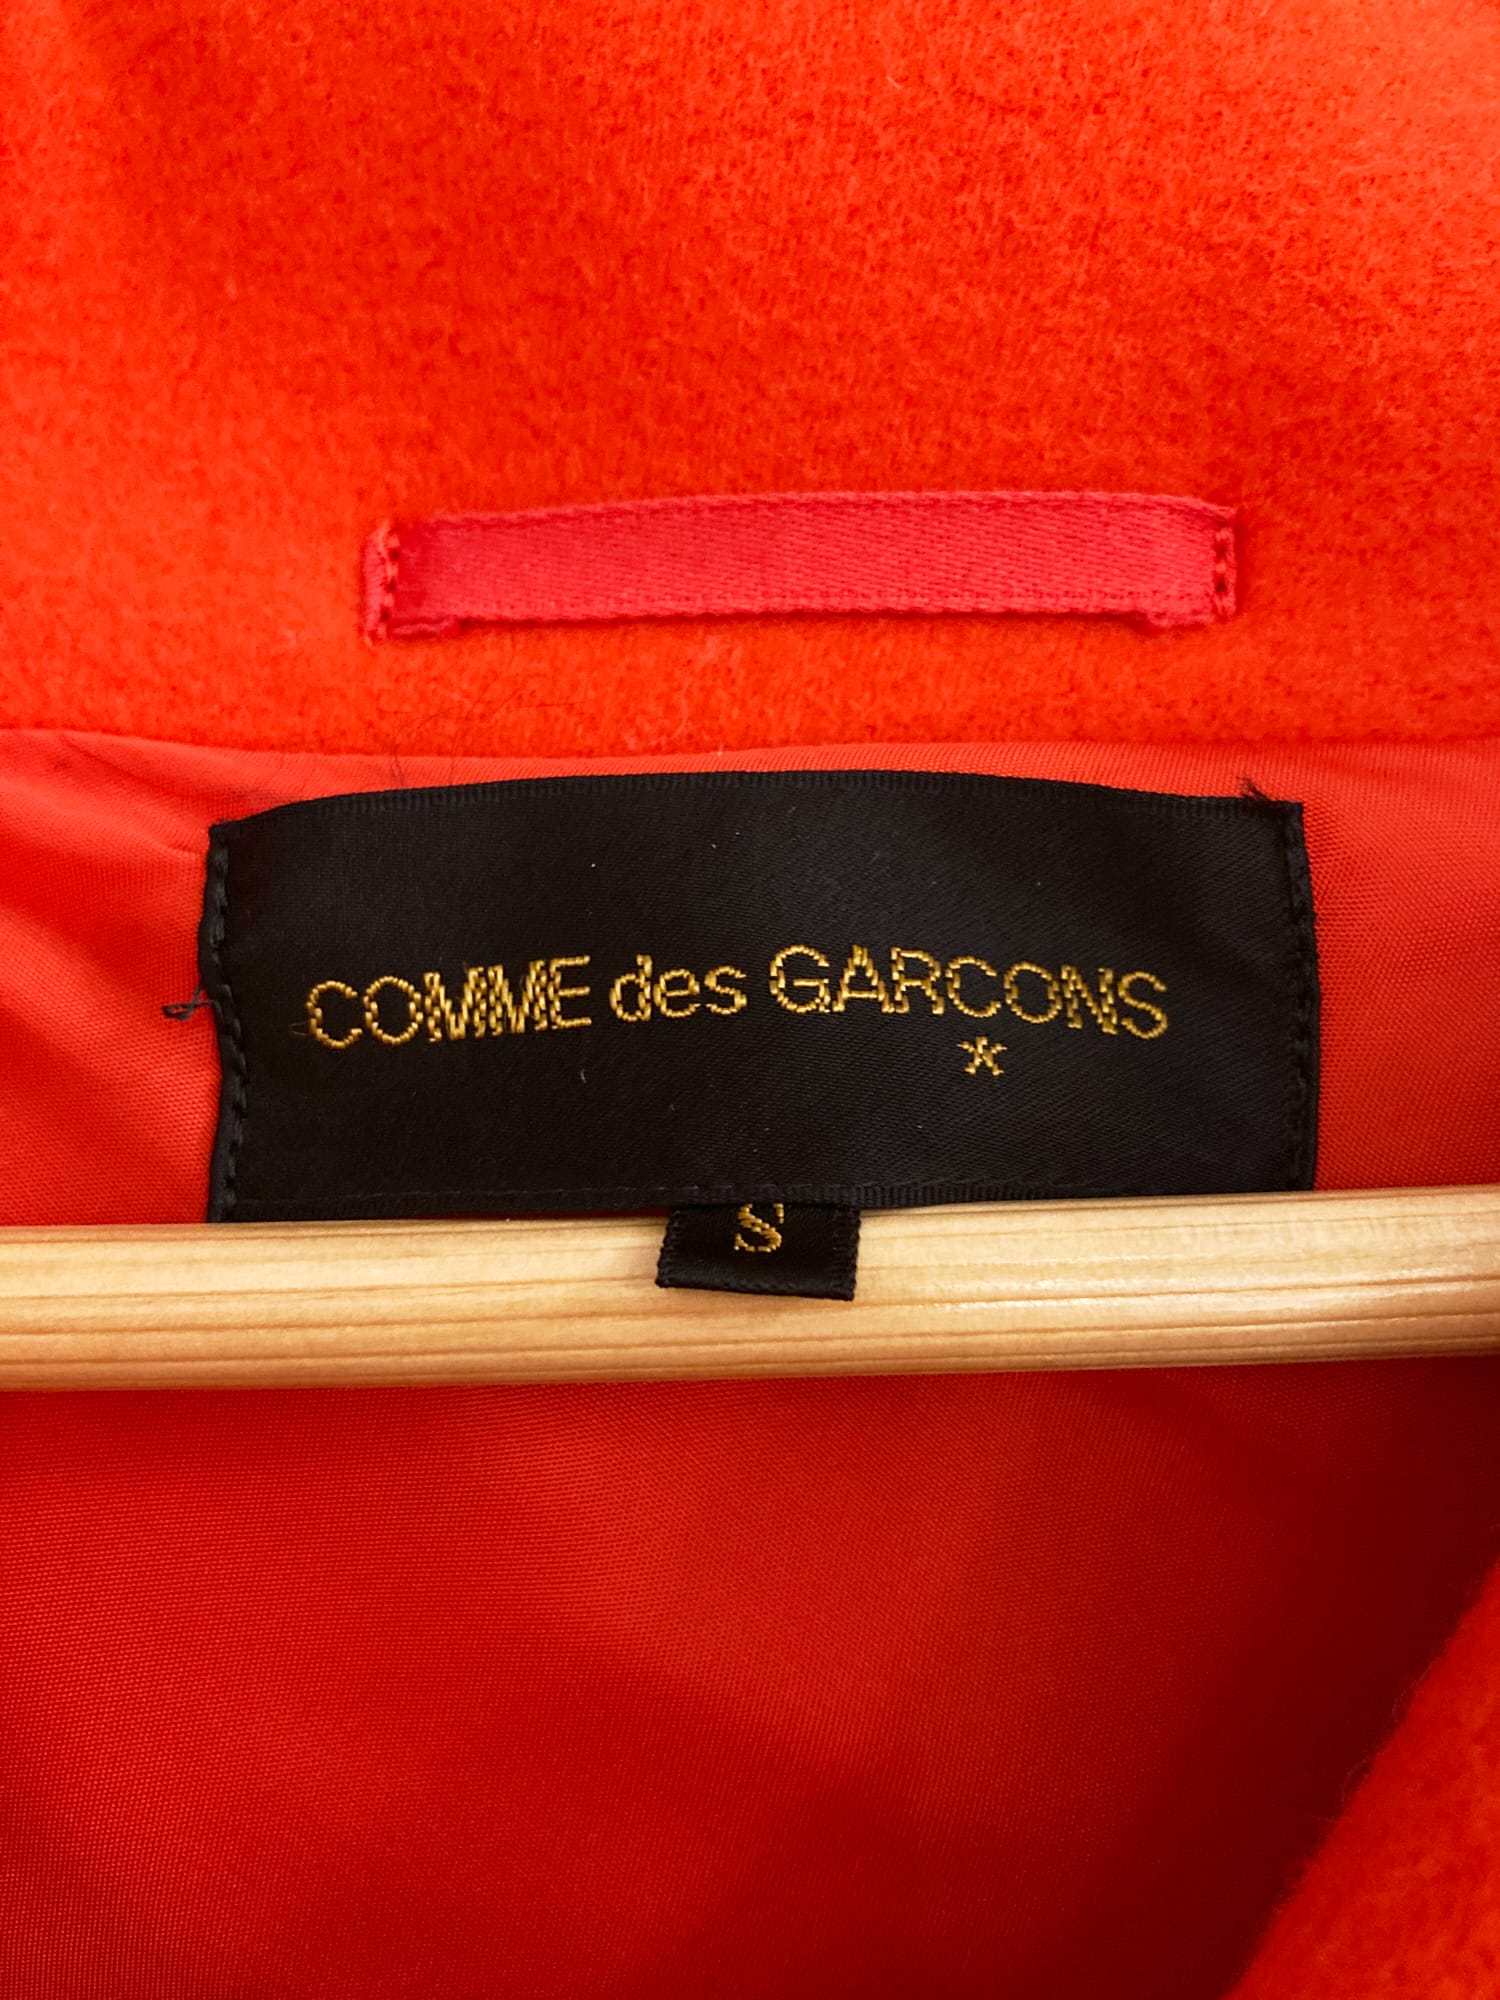 Comme des Garcons winter 1991 orange wool melton oversized dolman sleeve jacket